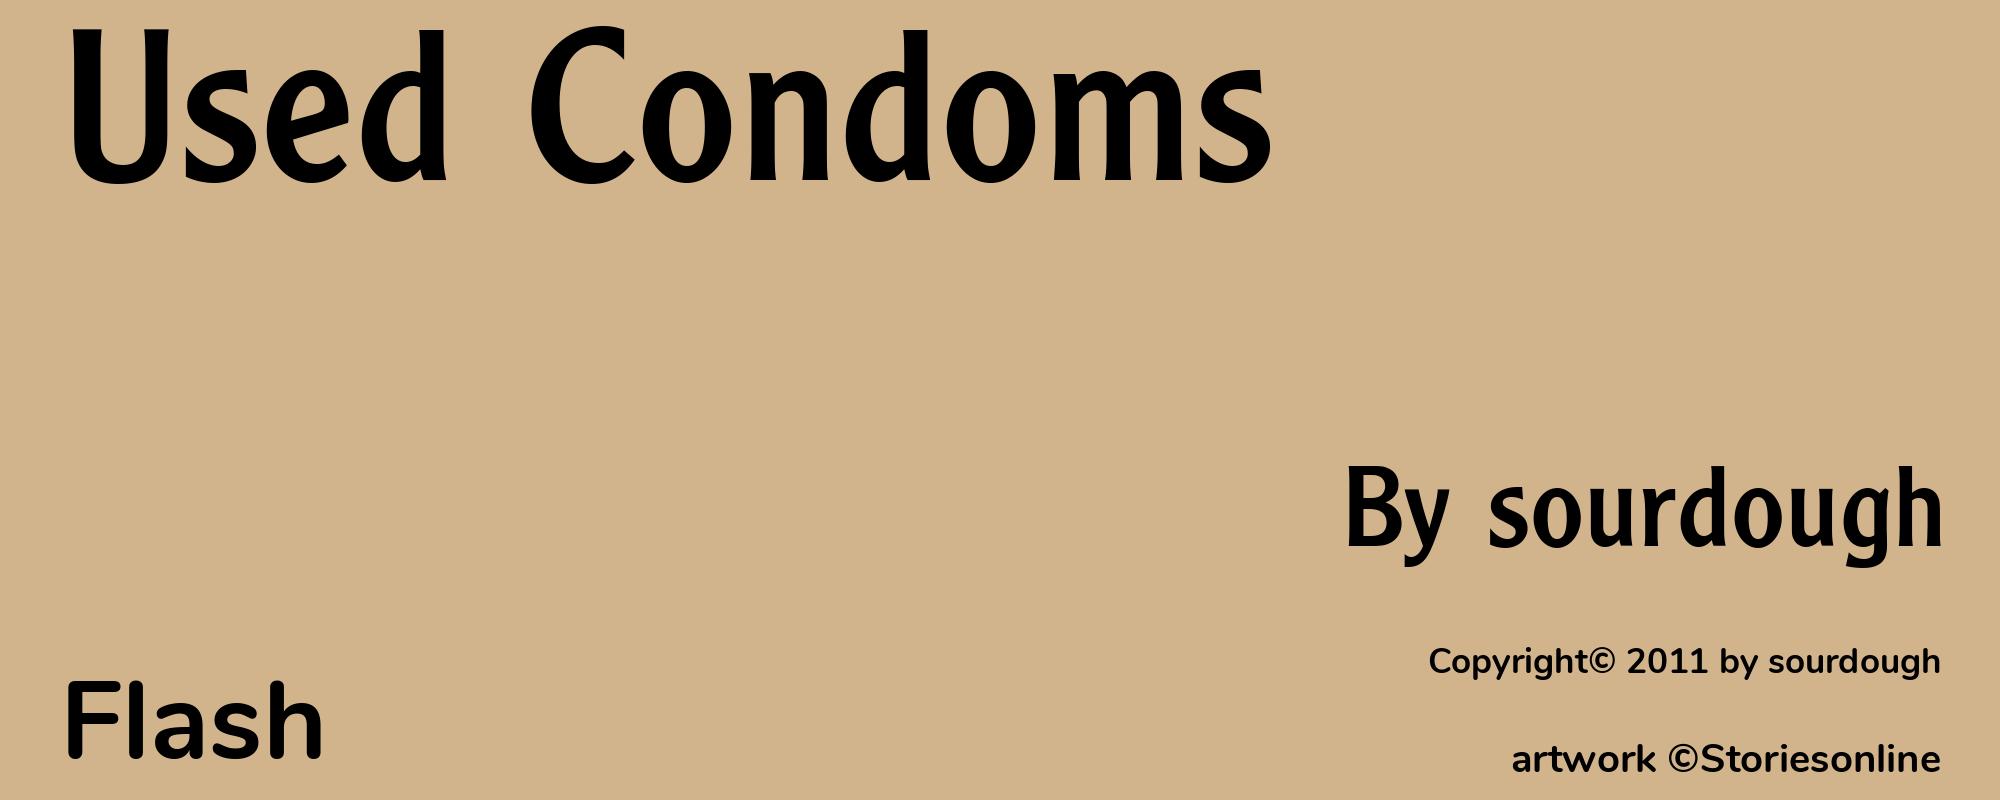 Used Condoms - Cover